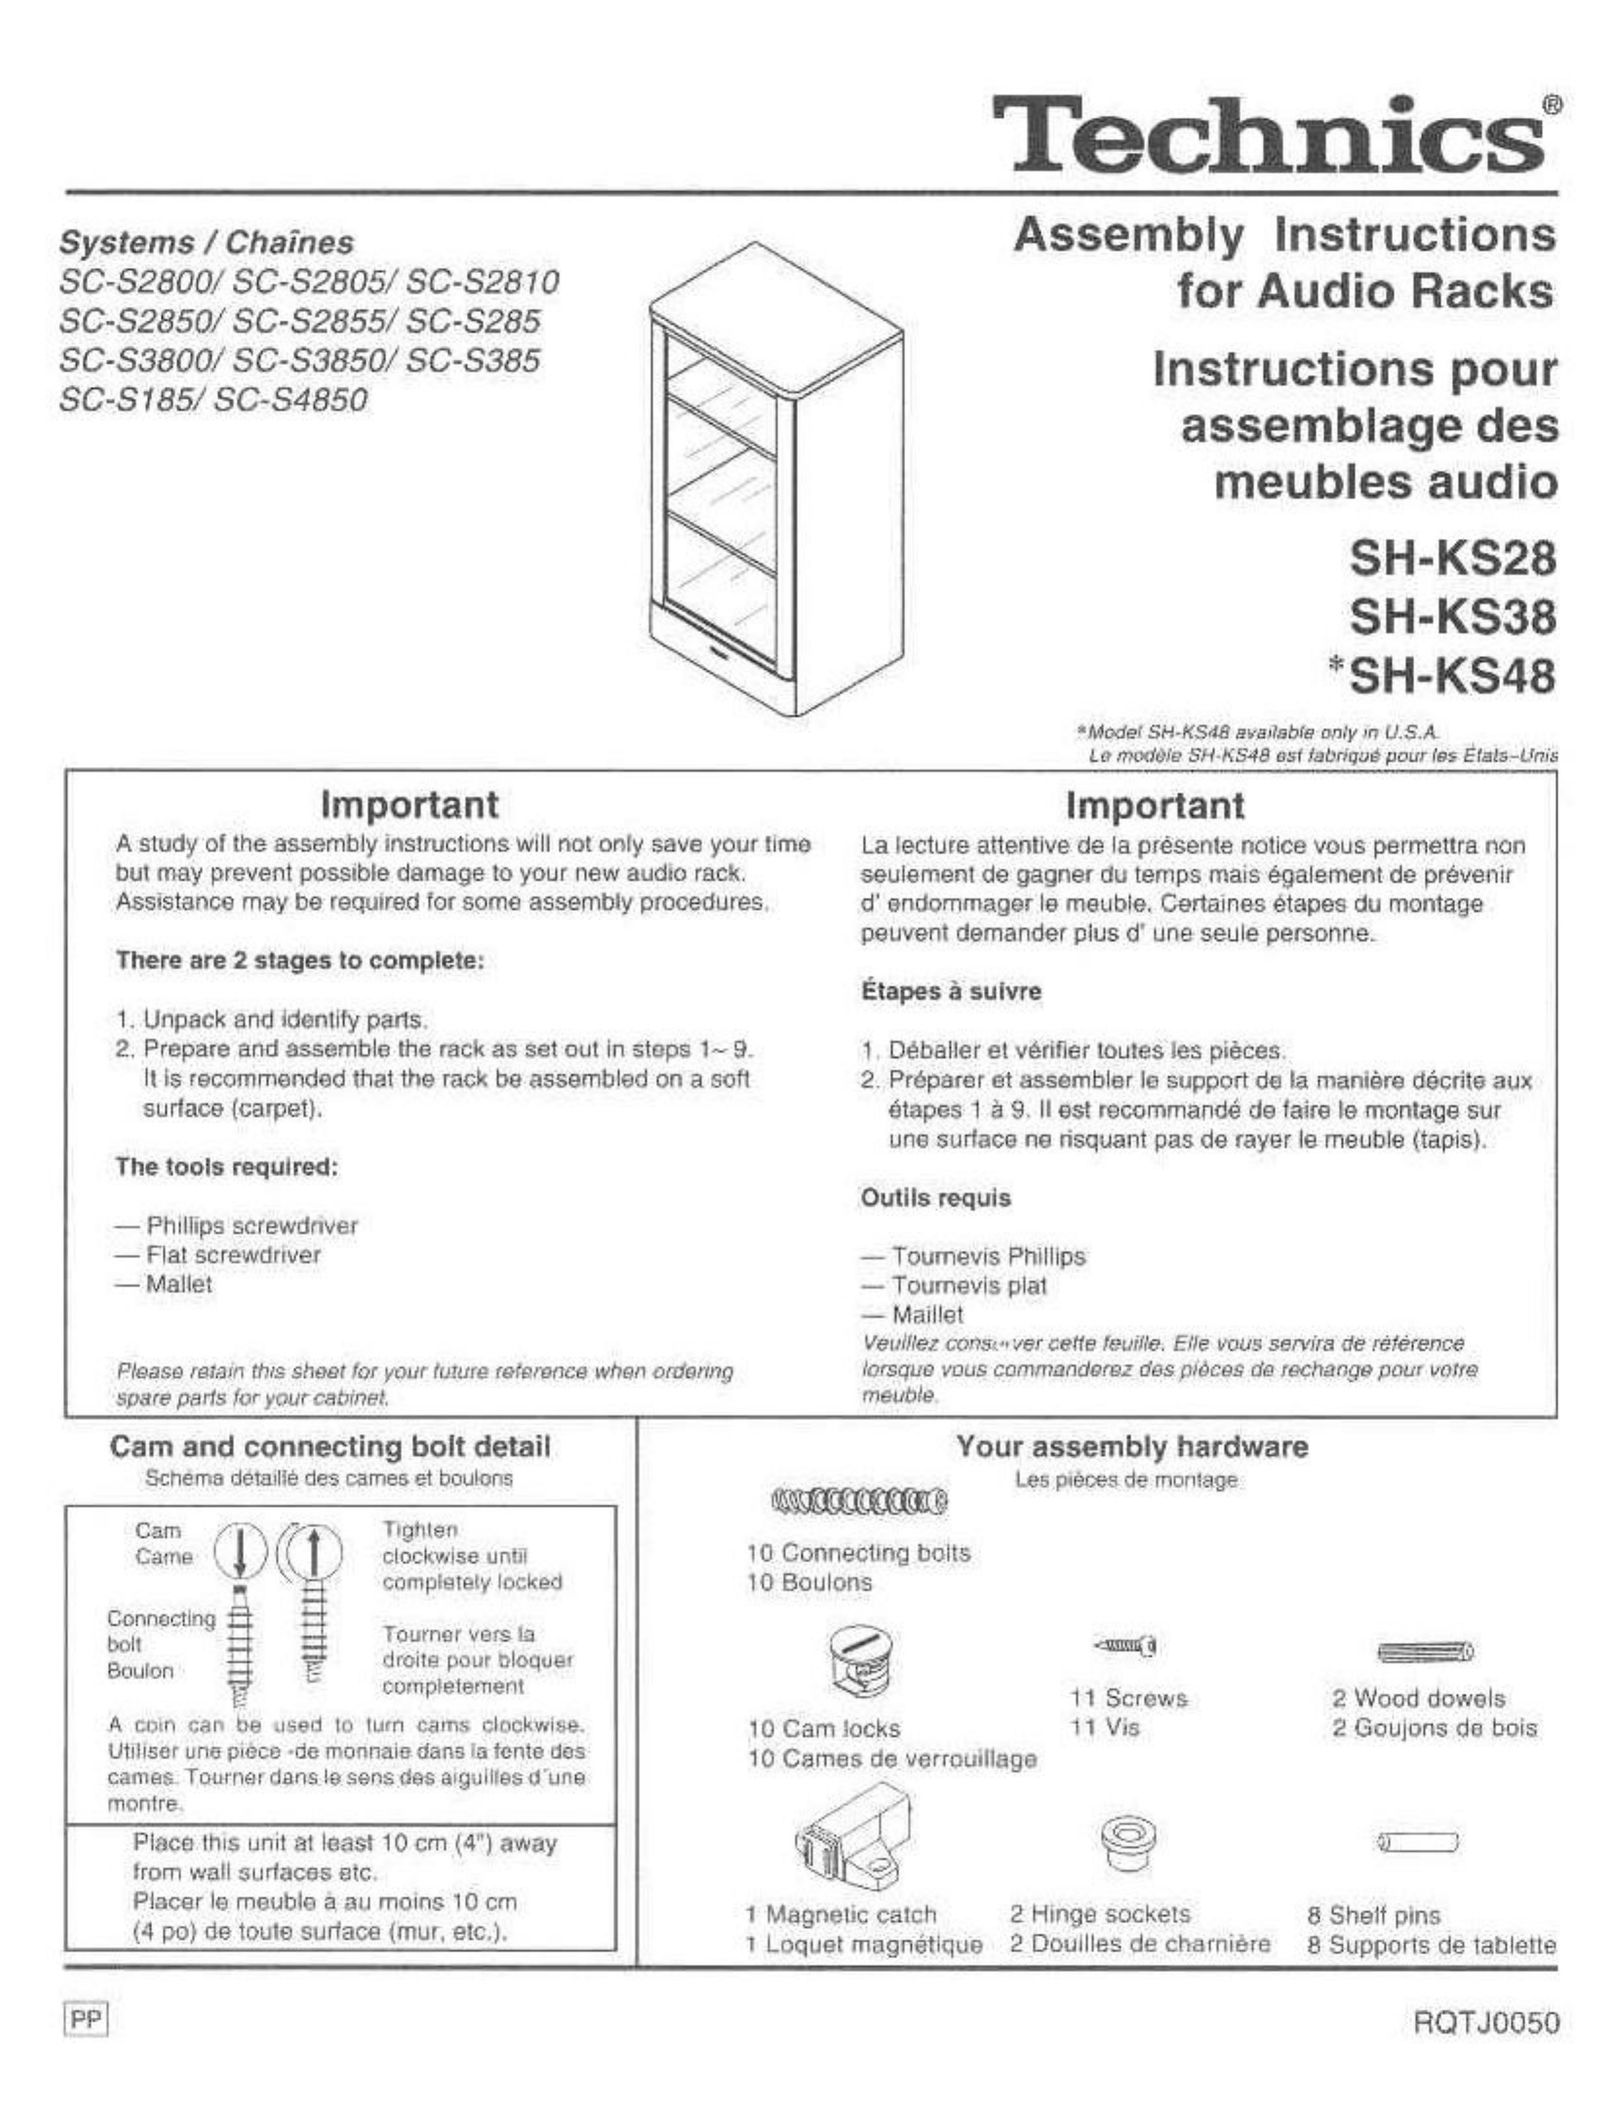 Technics SH-KS38 Stereo System User Manual